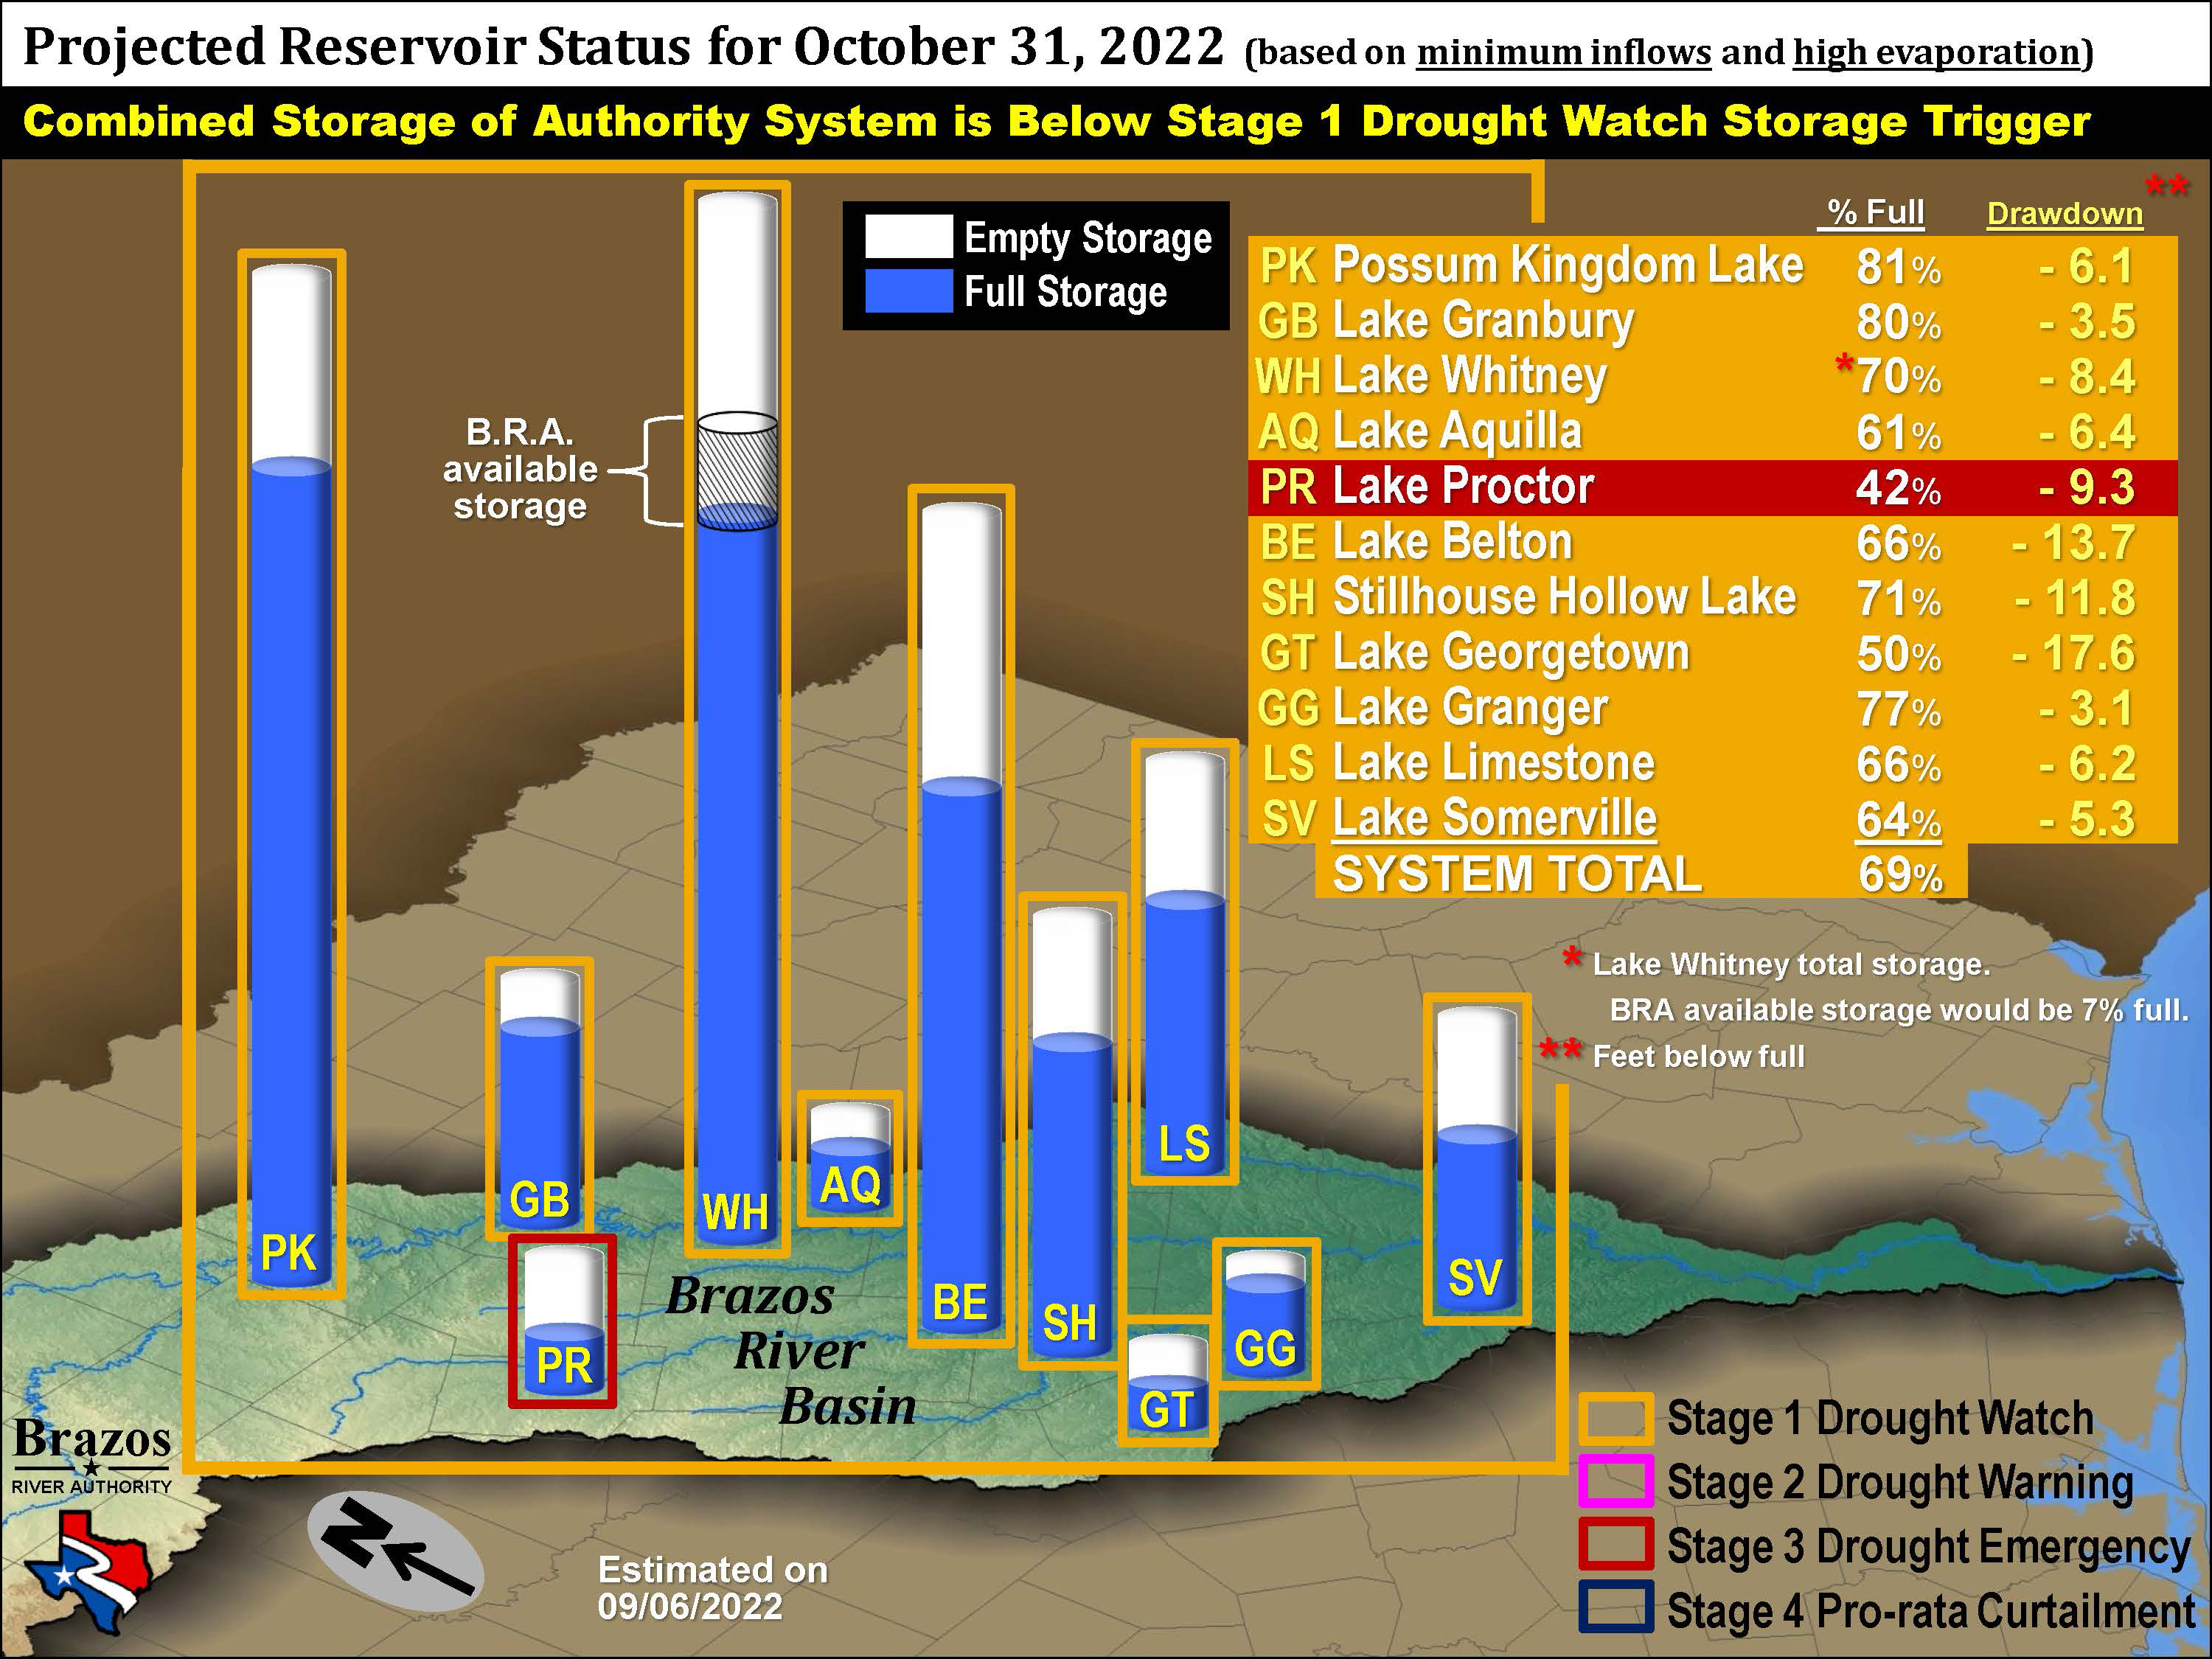 Projected reservoir status